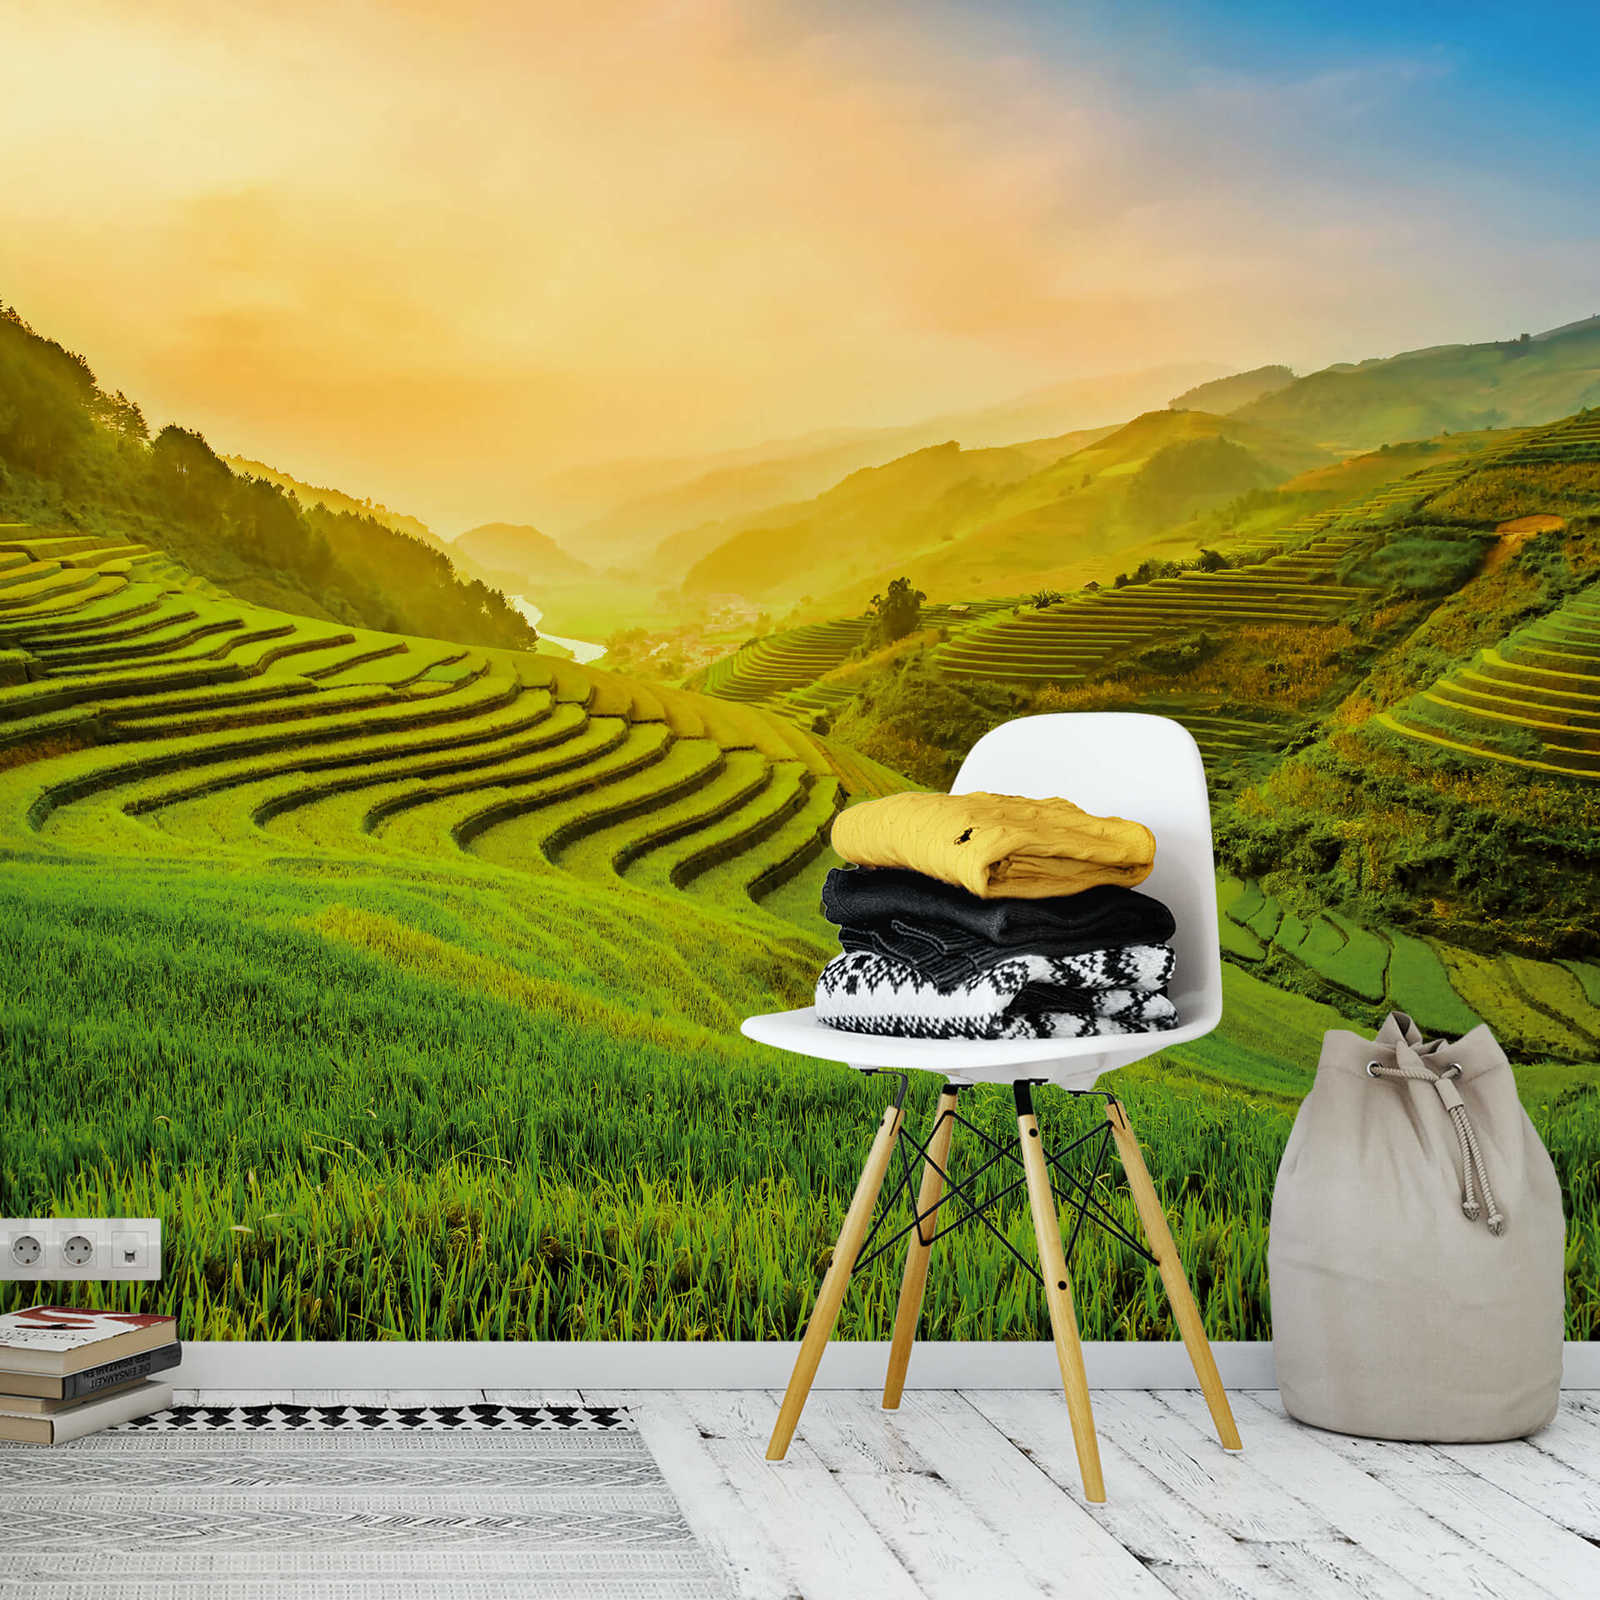             Vietnam rice fields at sunrise mural
        